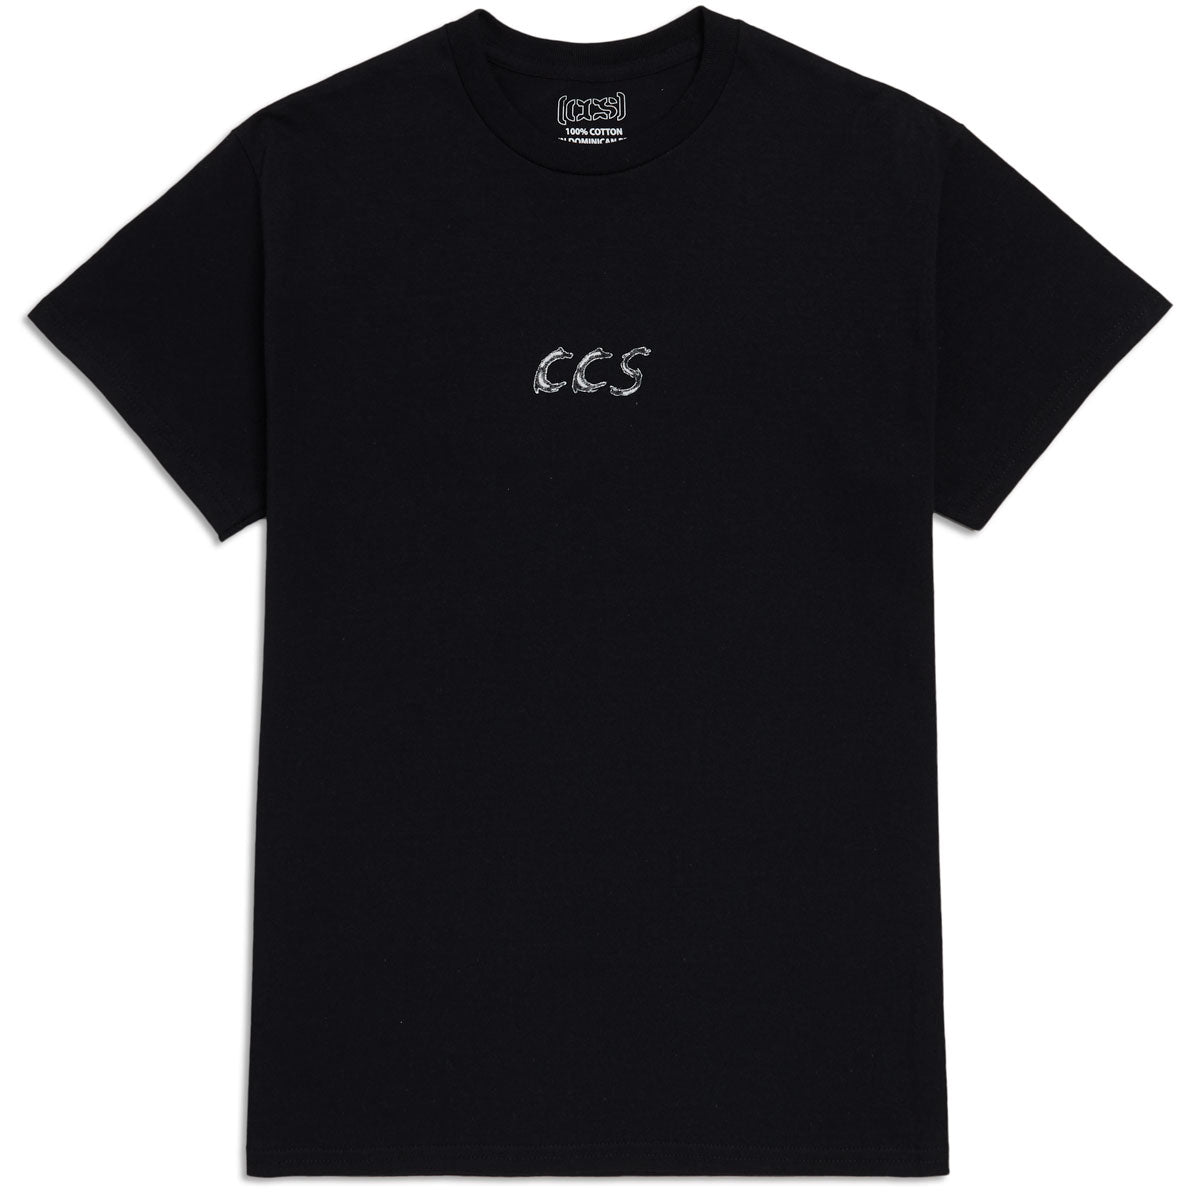 CCS Smile on the Surface T-Shirt - Black/White image 3